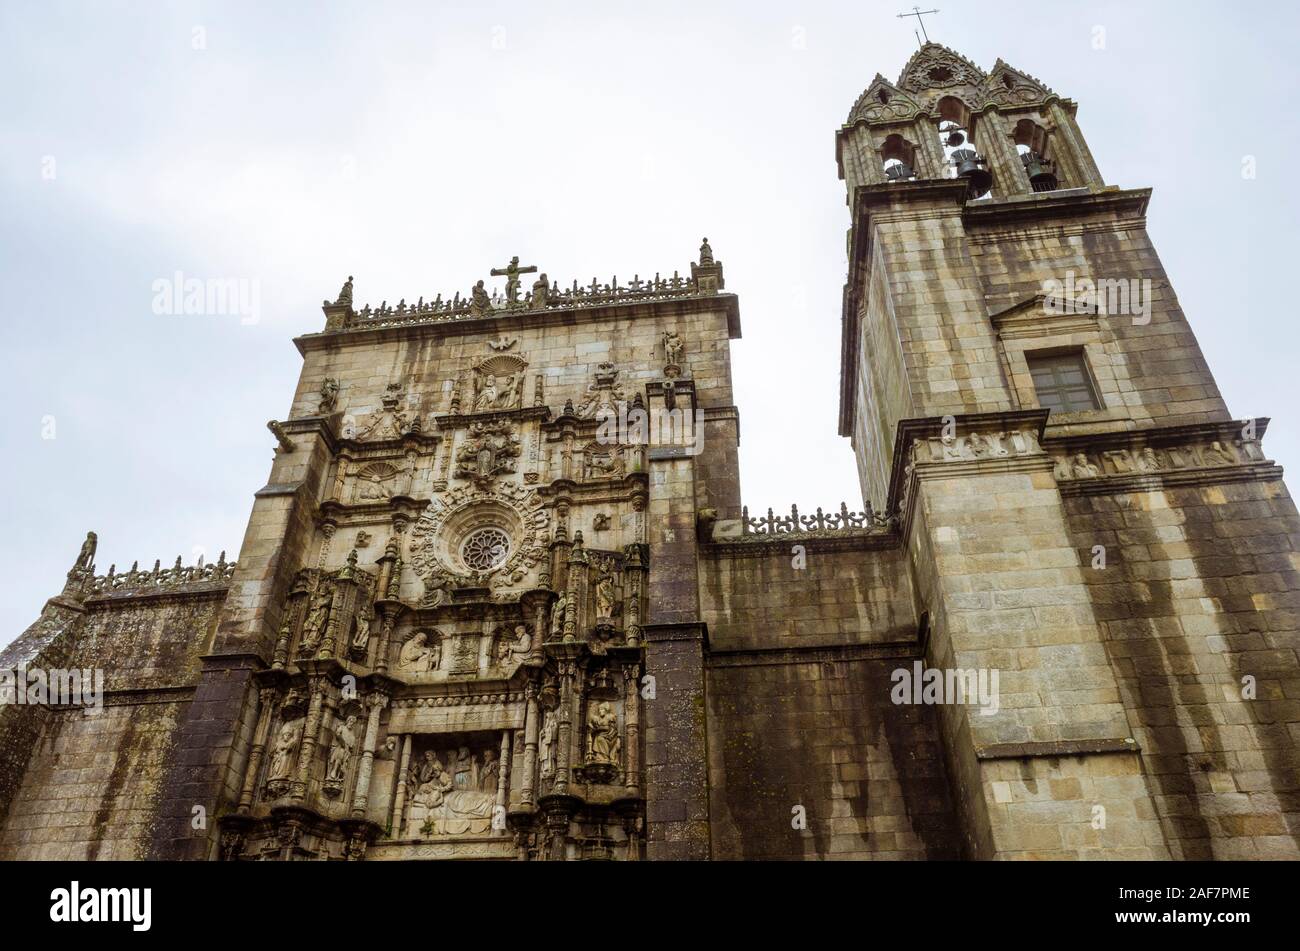 Pontevedra, Galicien, Spanien: Fassade und Glockenturm aus dem 16. Jahrhundert, Basilika Santa María la Mayor mischen Gotik und Renaissance Stil. Stockfoto